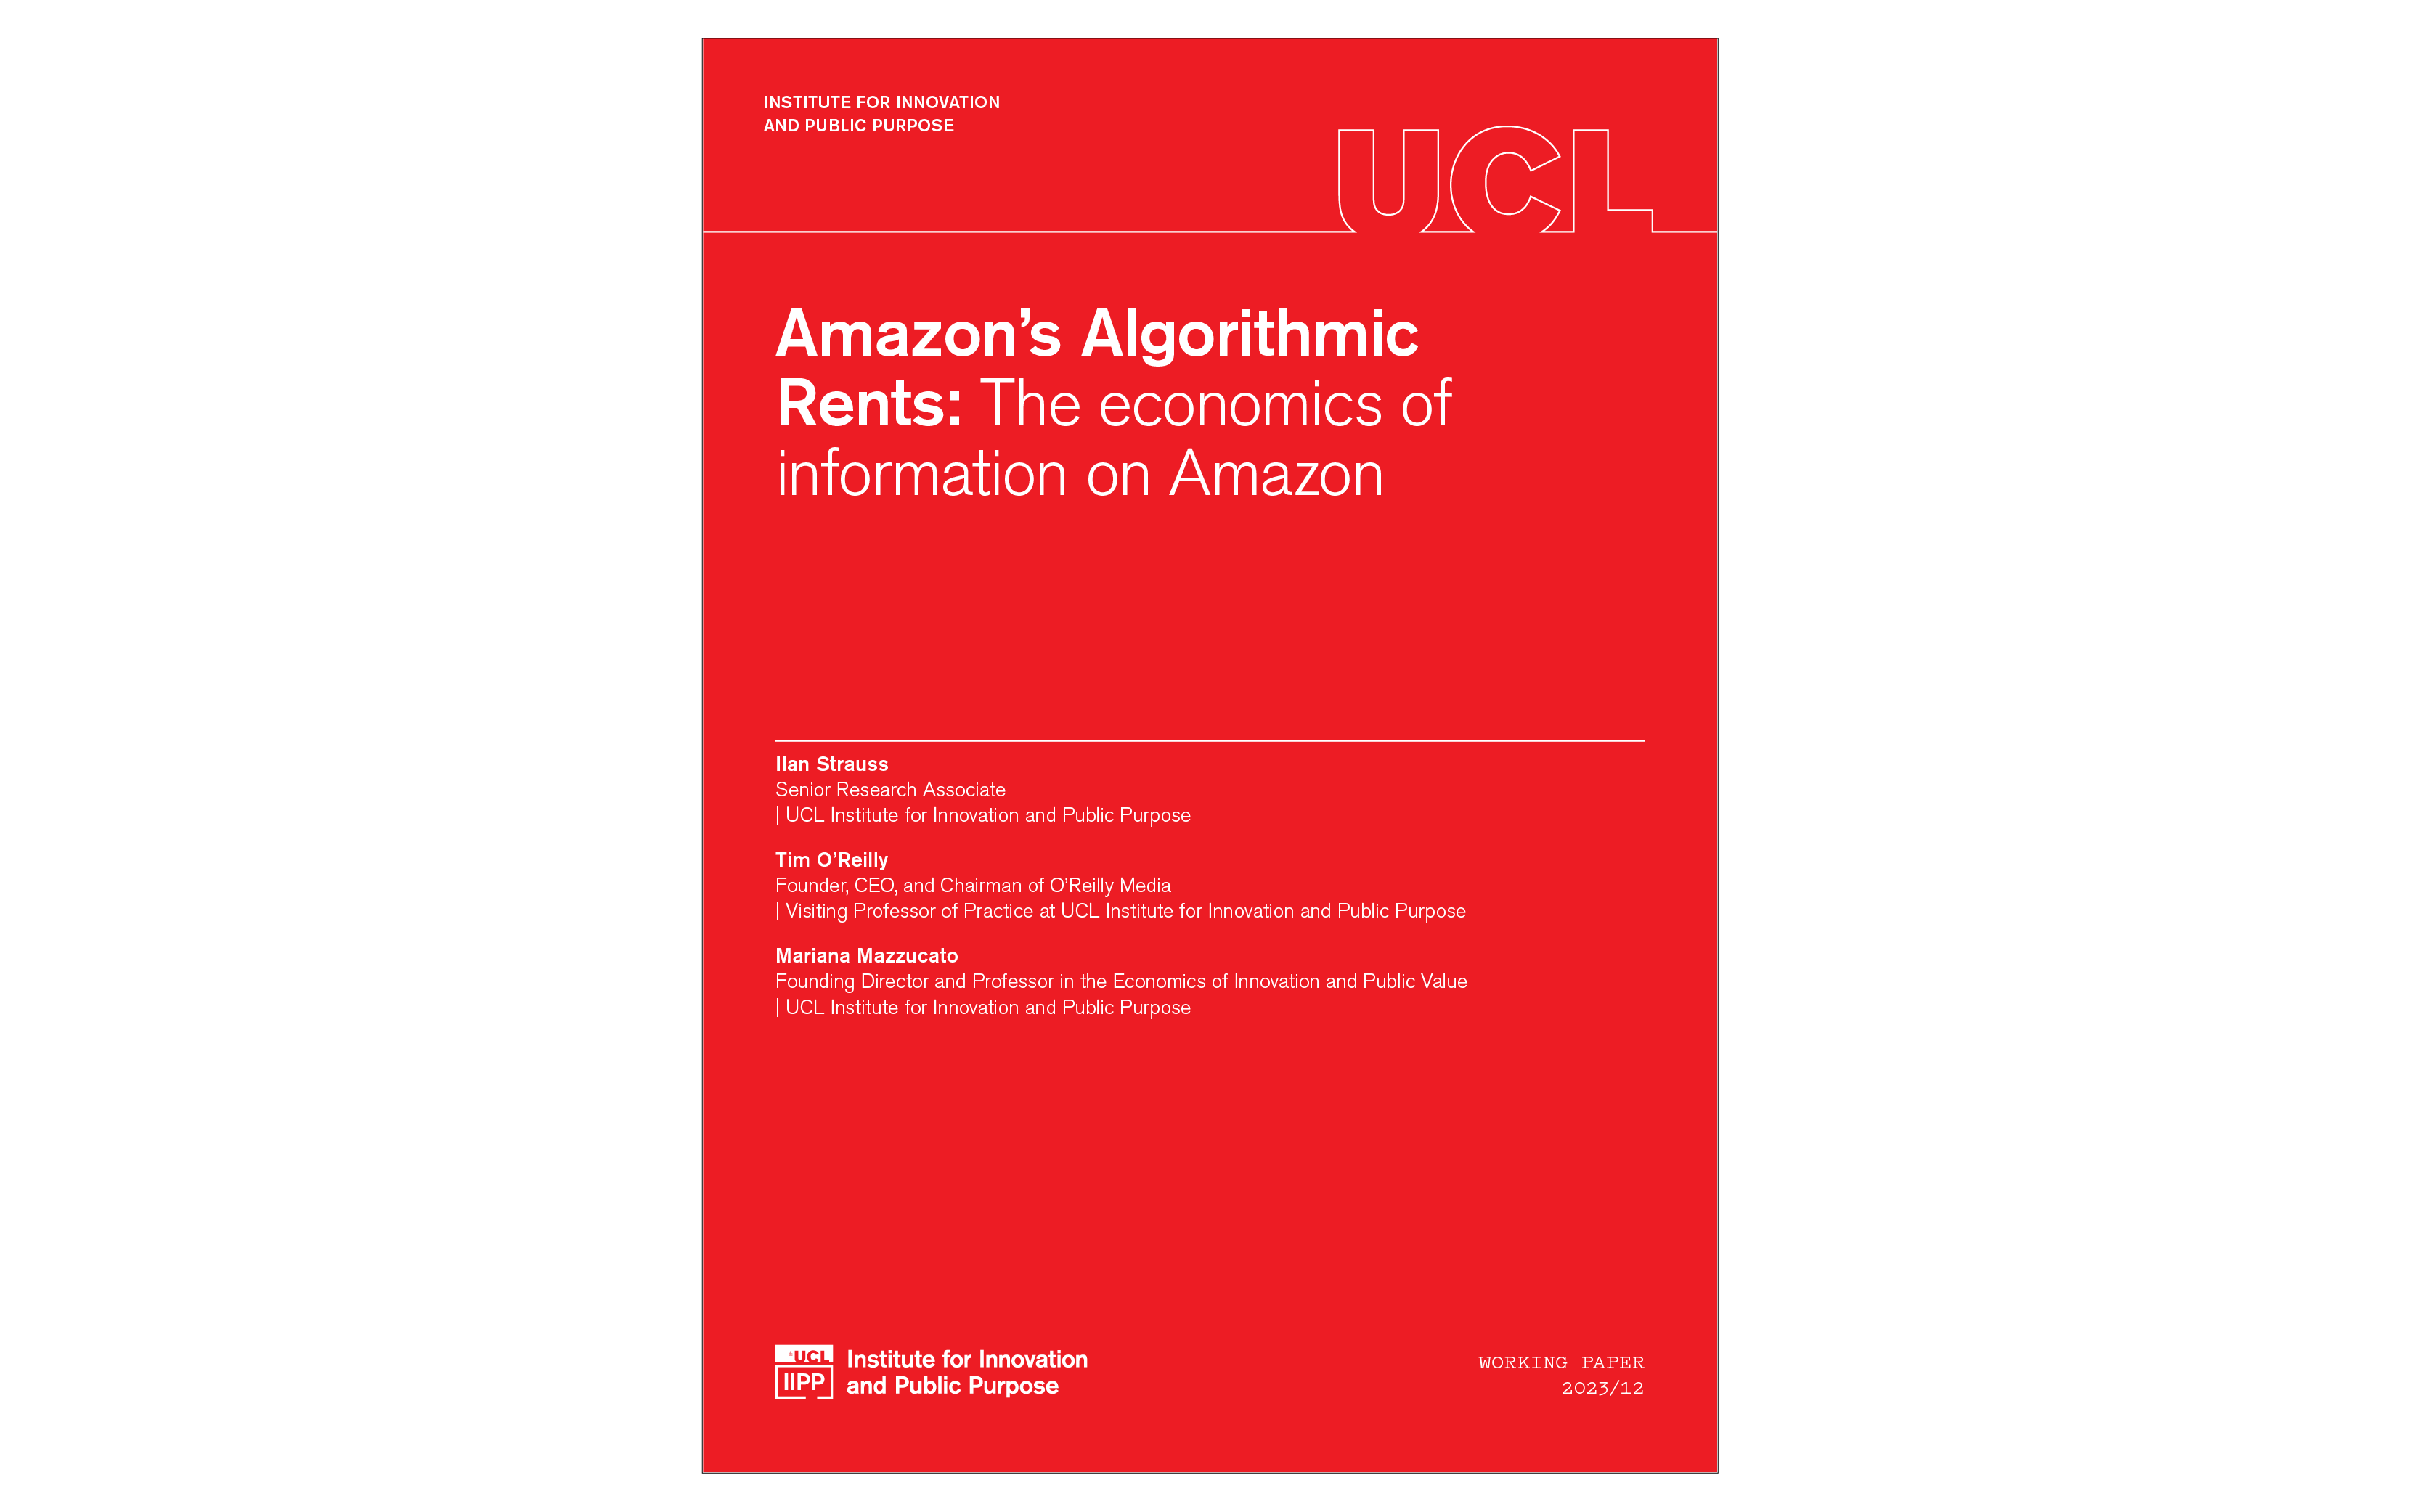 amazons_algorithmic_rents_publications-thumbnail-800x500.png